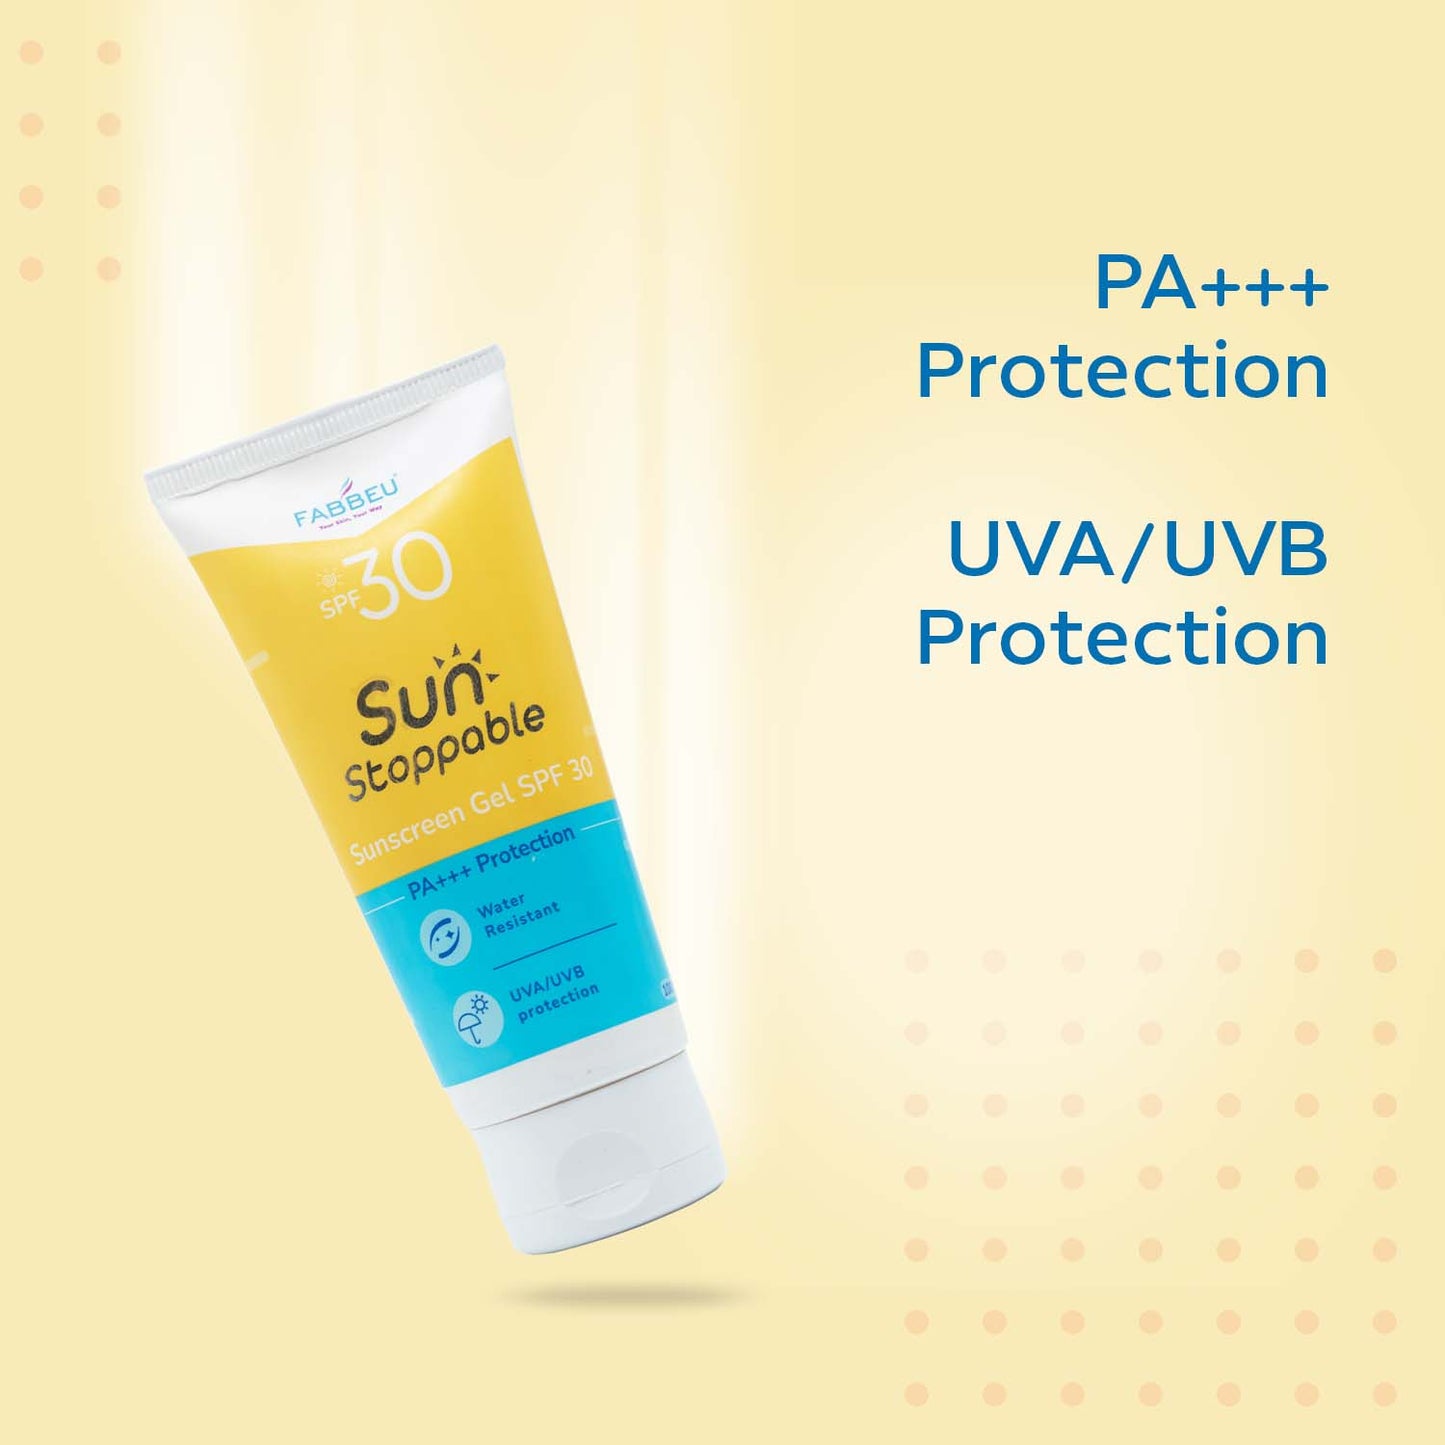 Sun Stoppable Sunscreen SPF 30